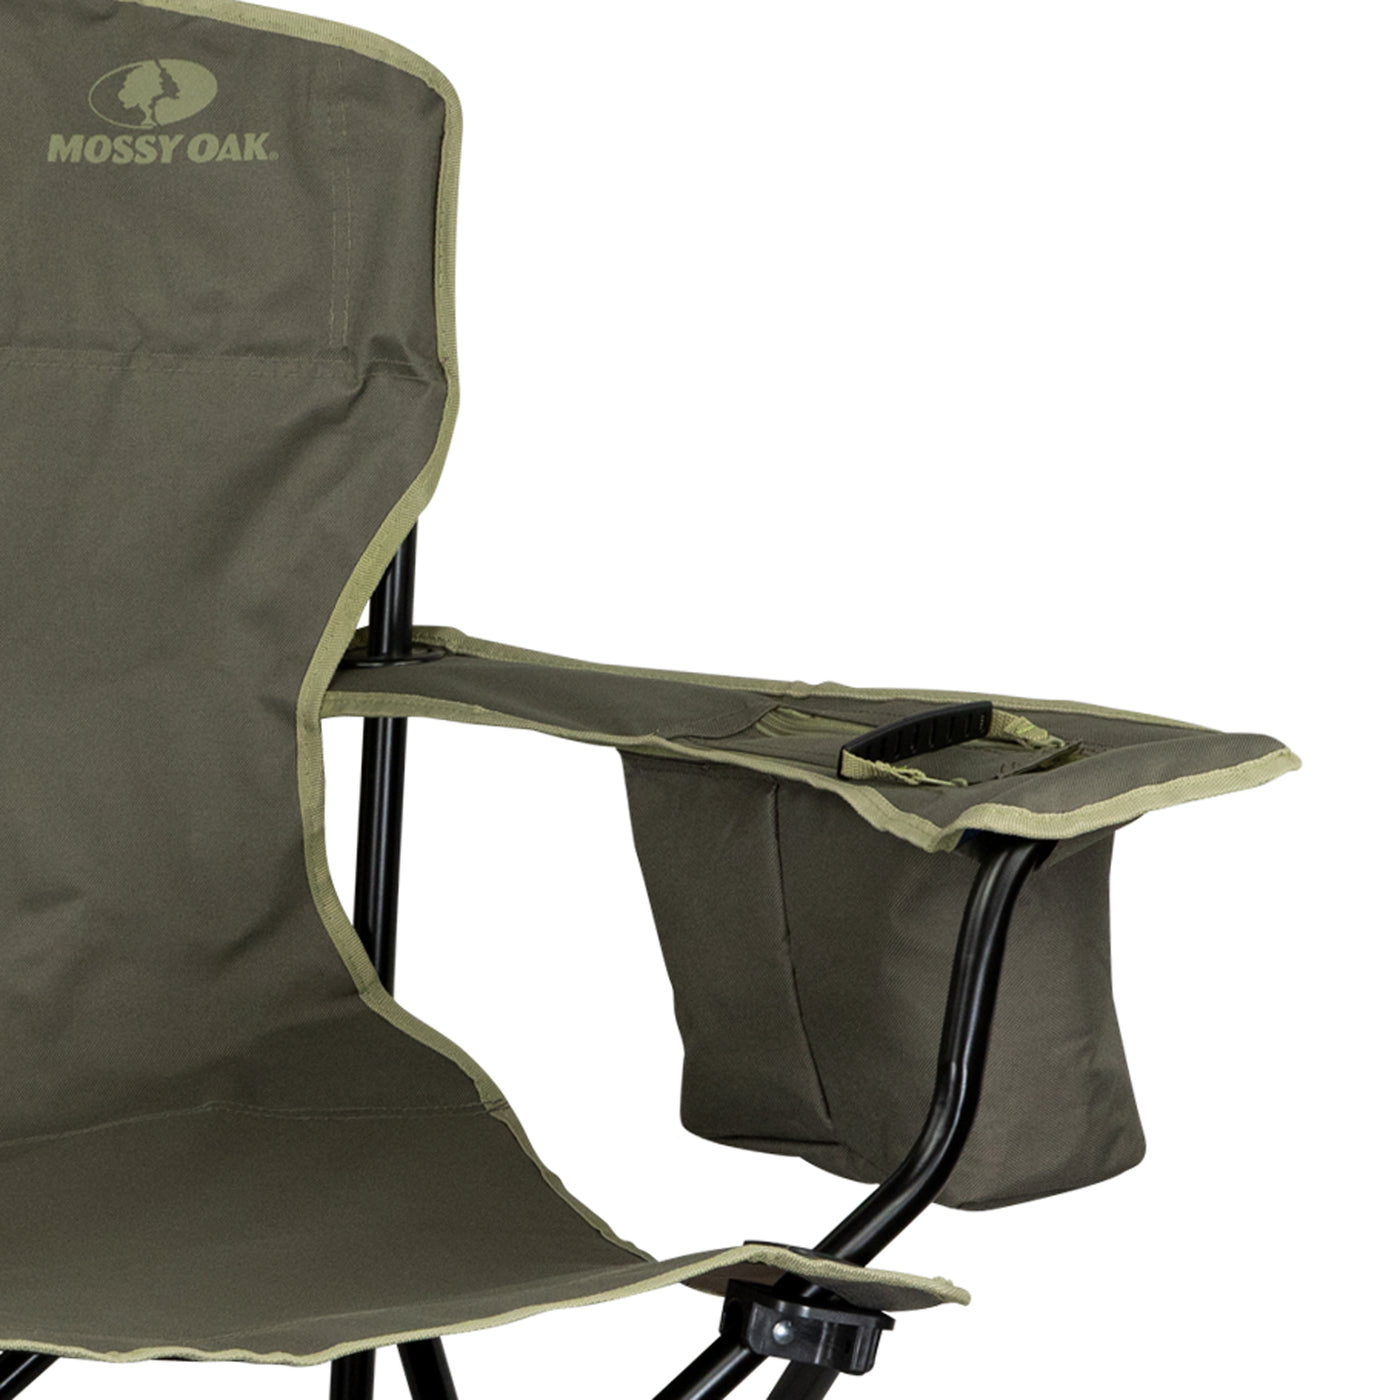 Mossy Oak Deluxe Folding Camping Chair